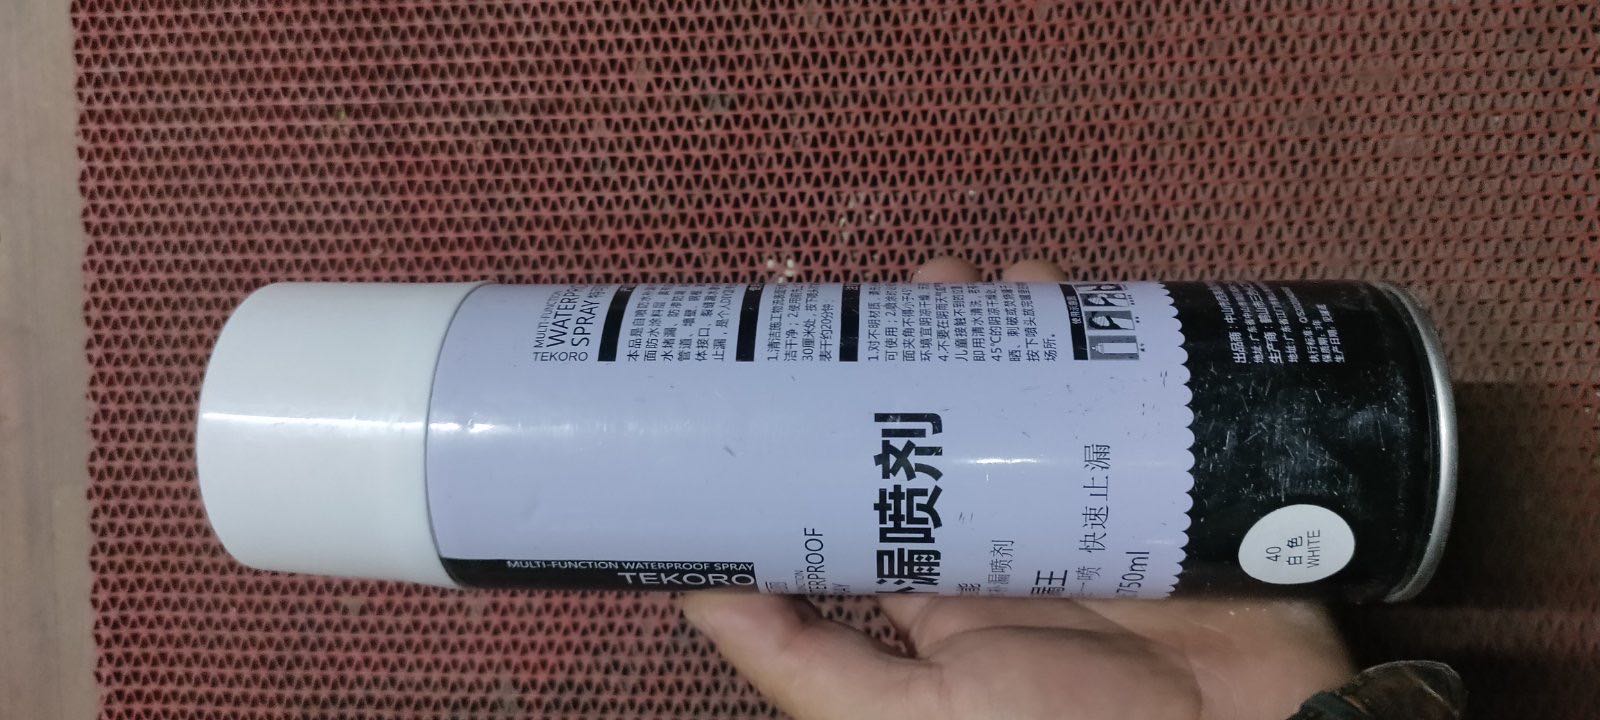 Leak Seal spray – DarazUAE